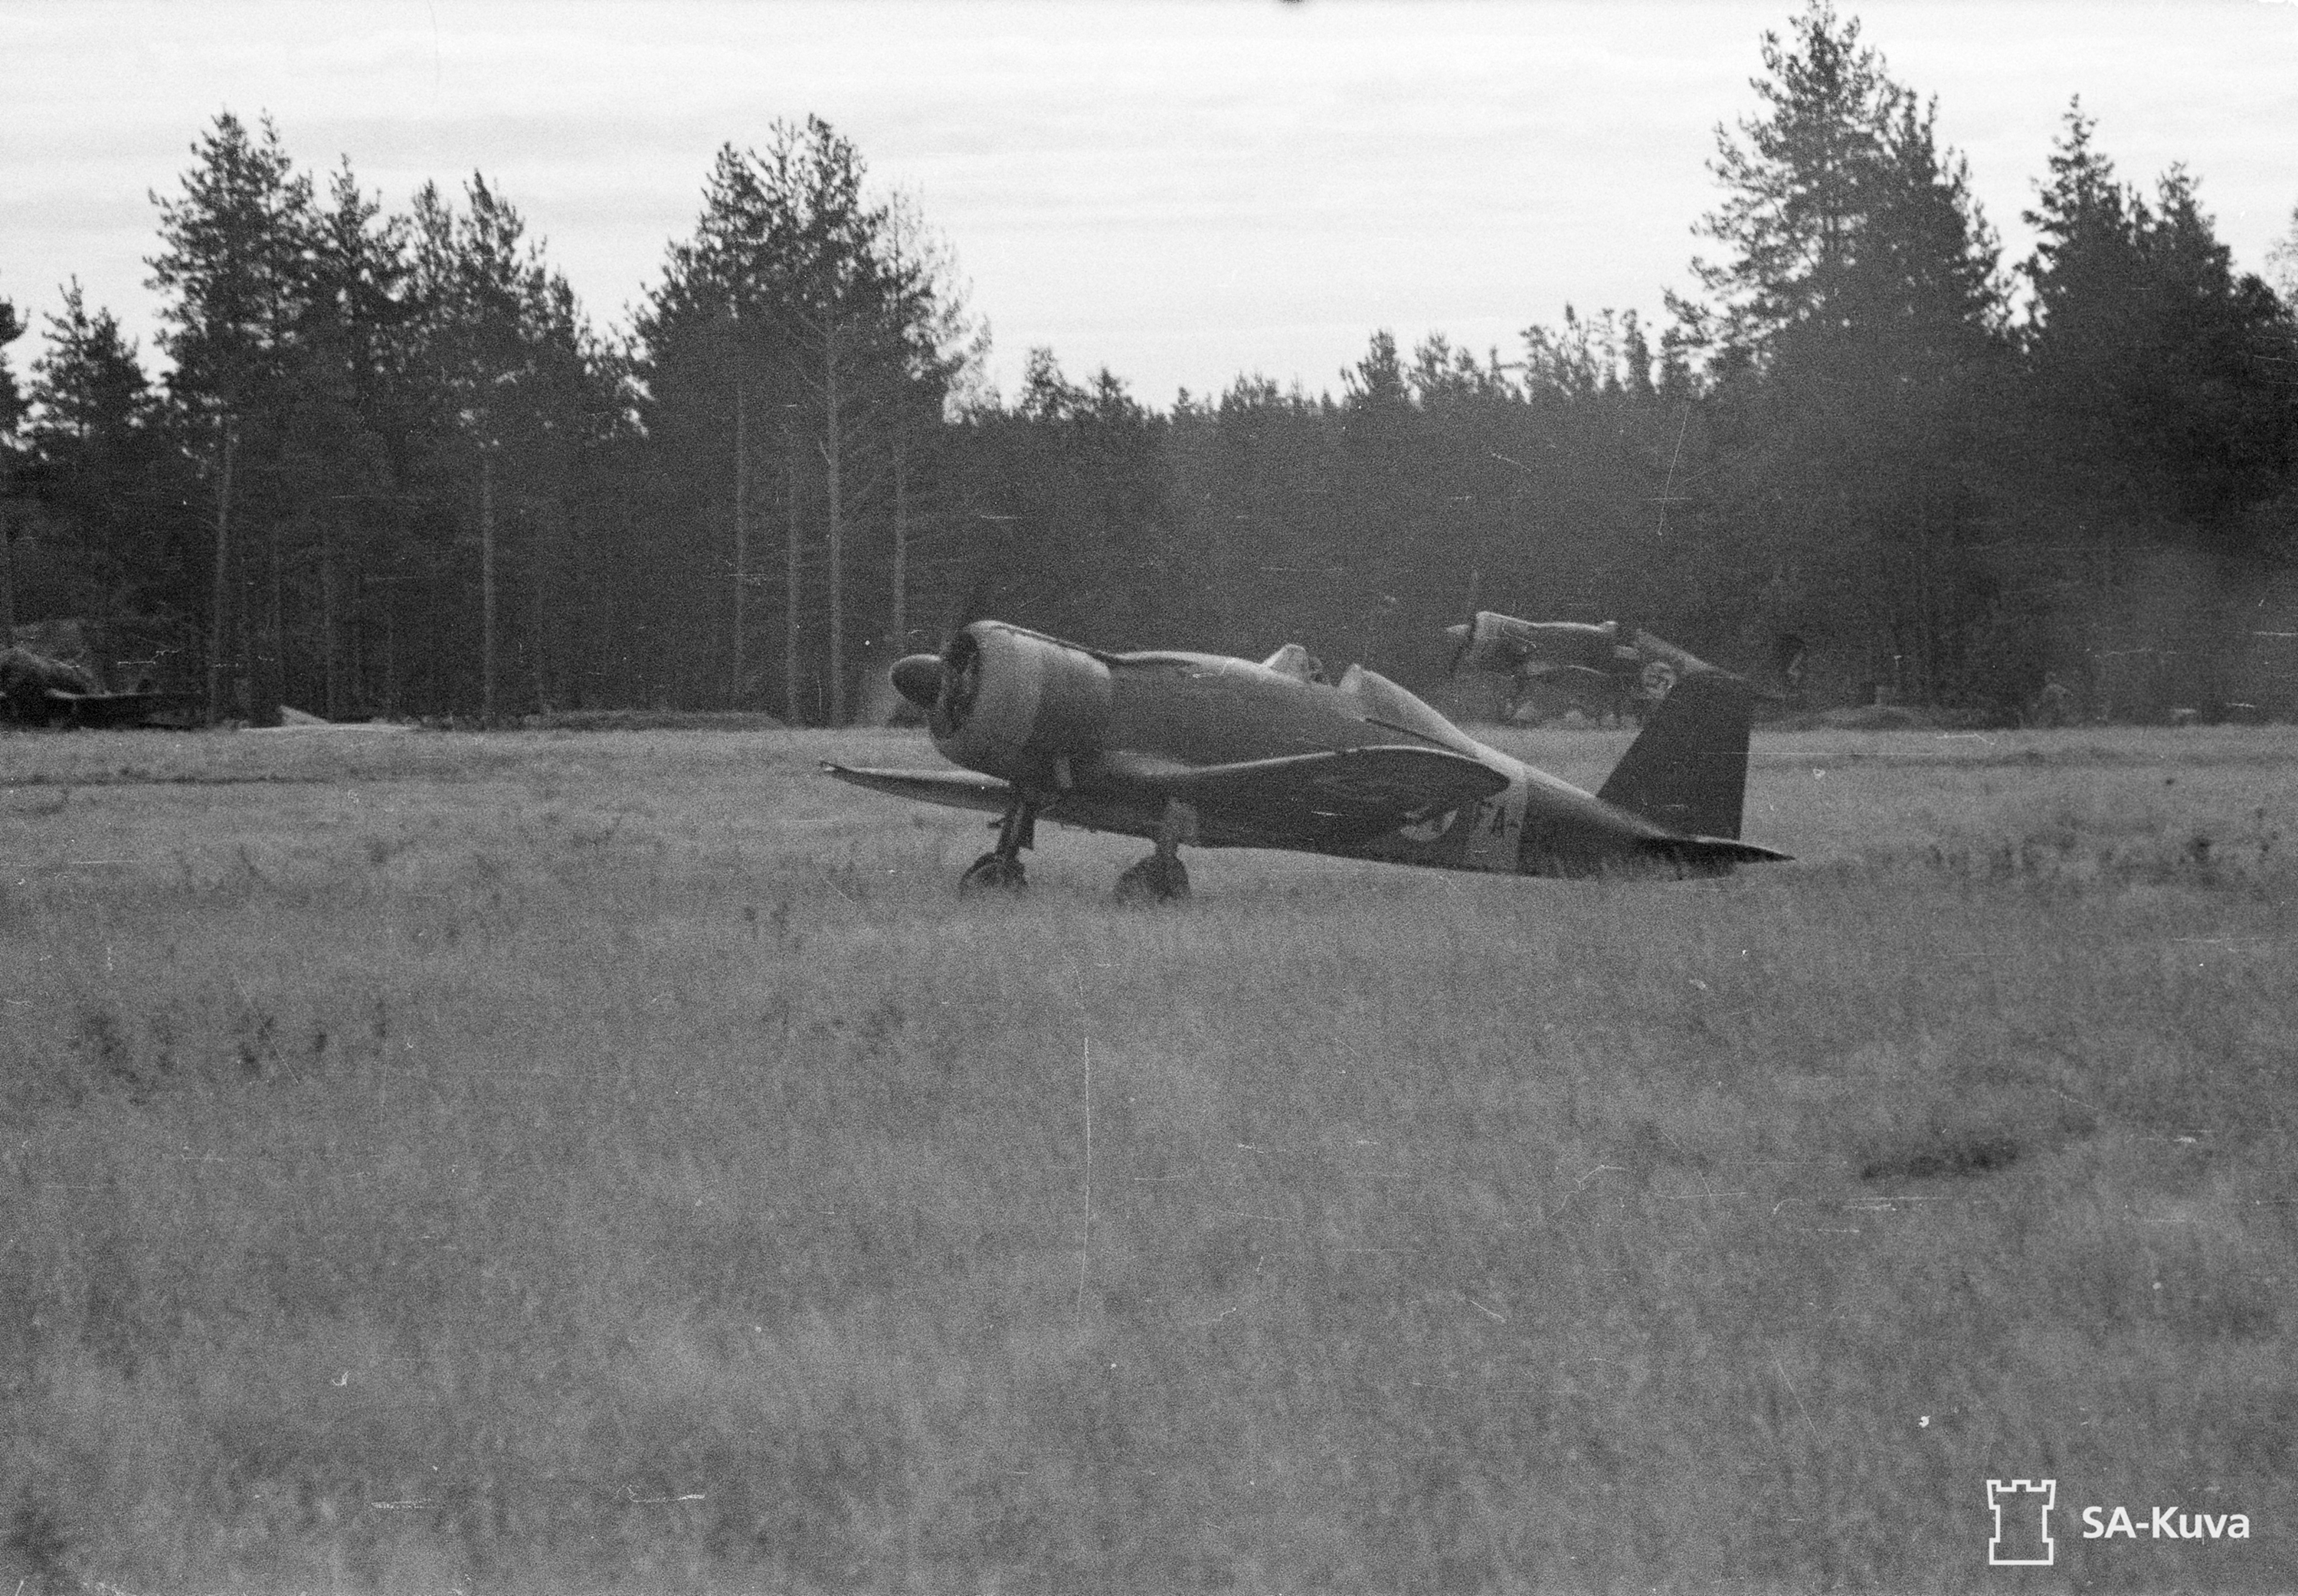 Fiat G50 Freccia FAF 3.LeLv26 FA32 taking off Raudun Finland 3rd Sep 1942 106591